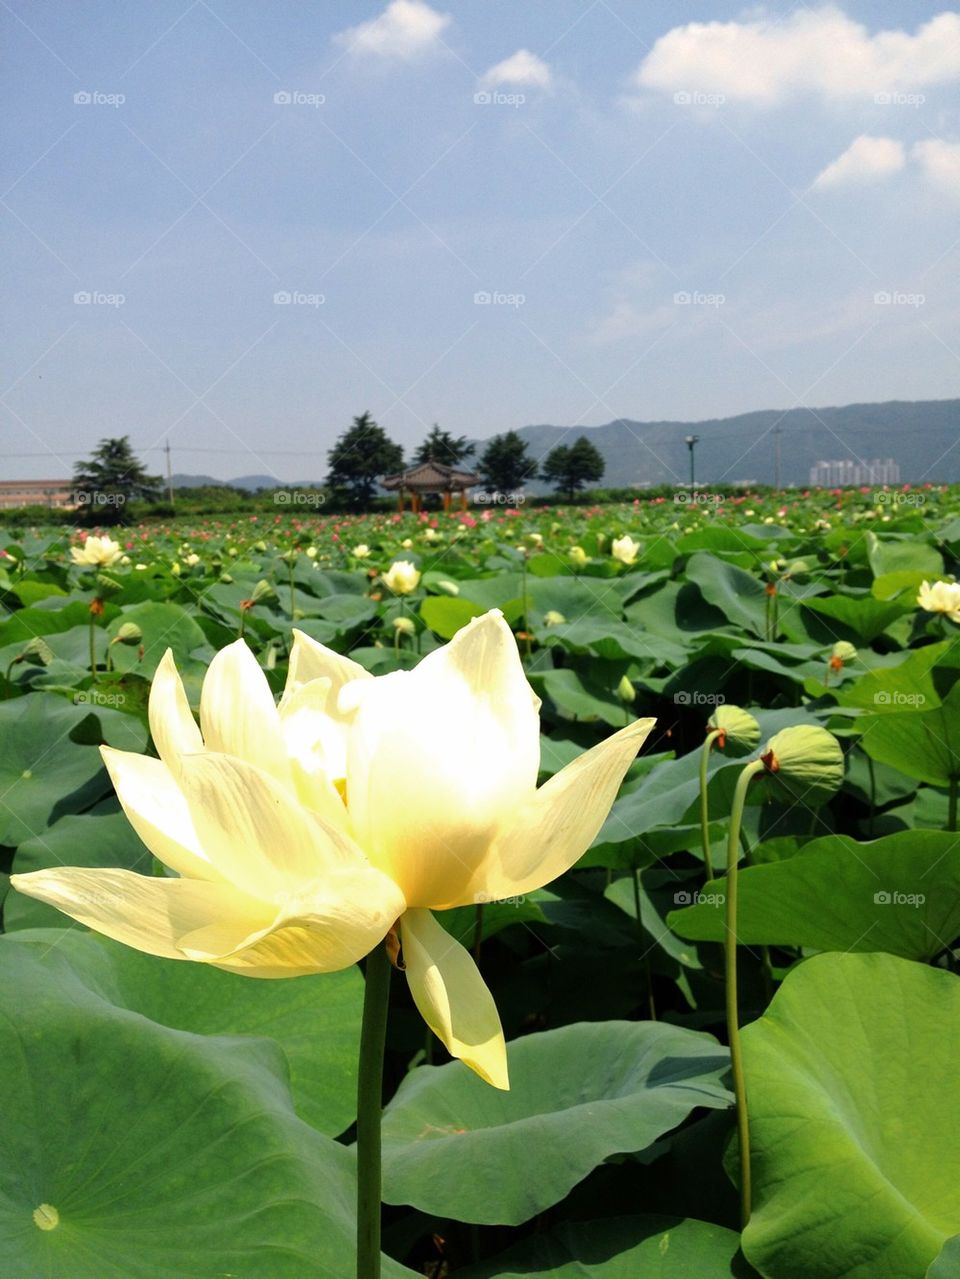 Lotus field 